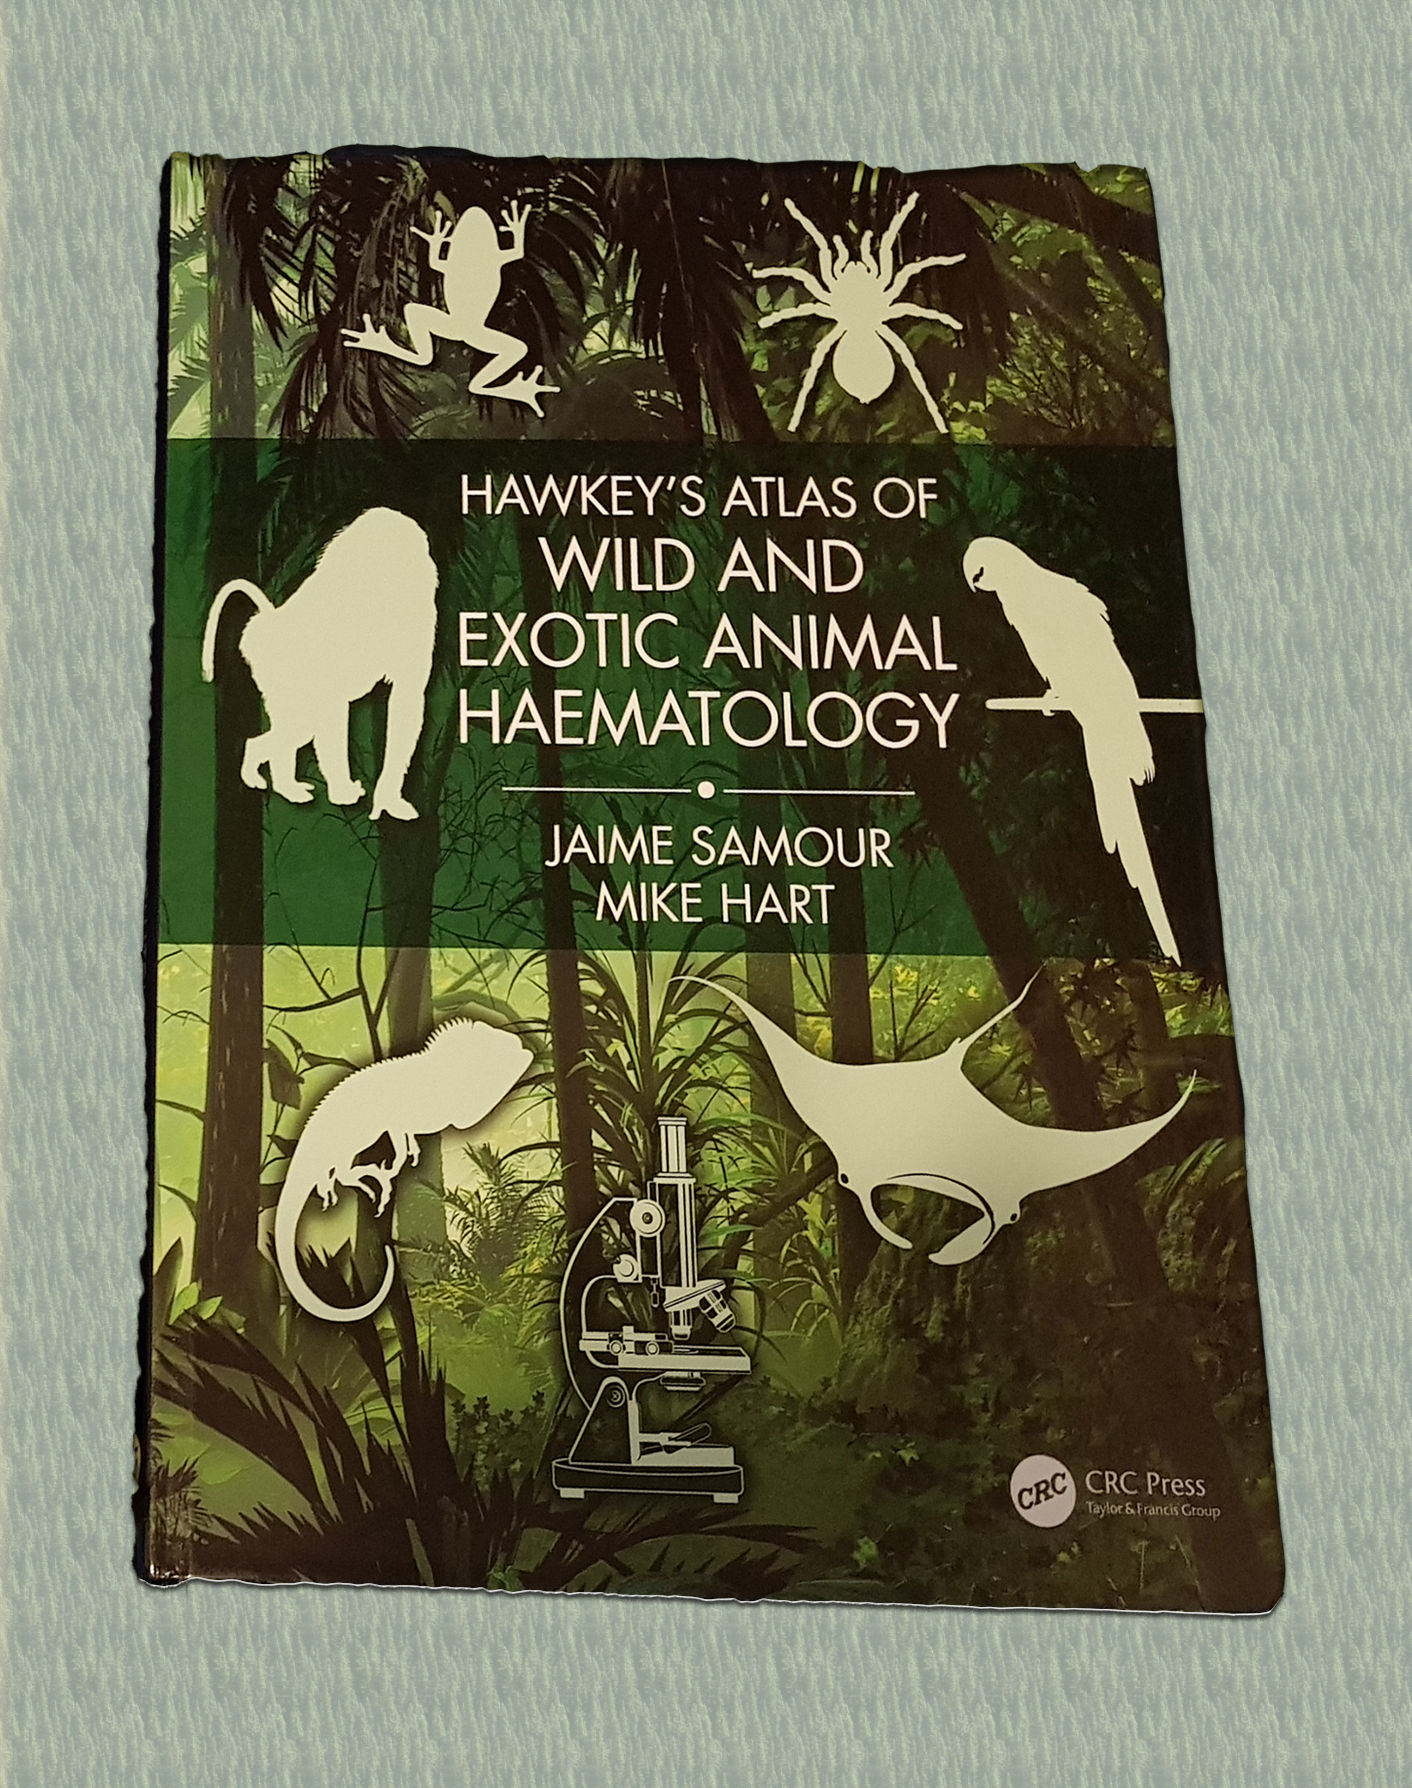 Hawkey's Atlas of Wild and Exotic Animal Hematology - Jaime Samour